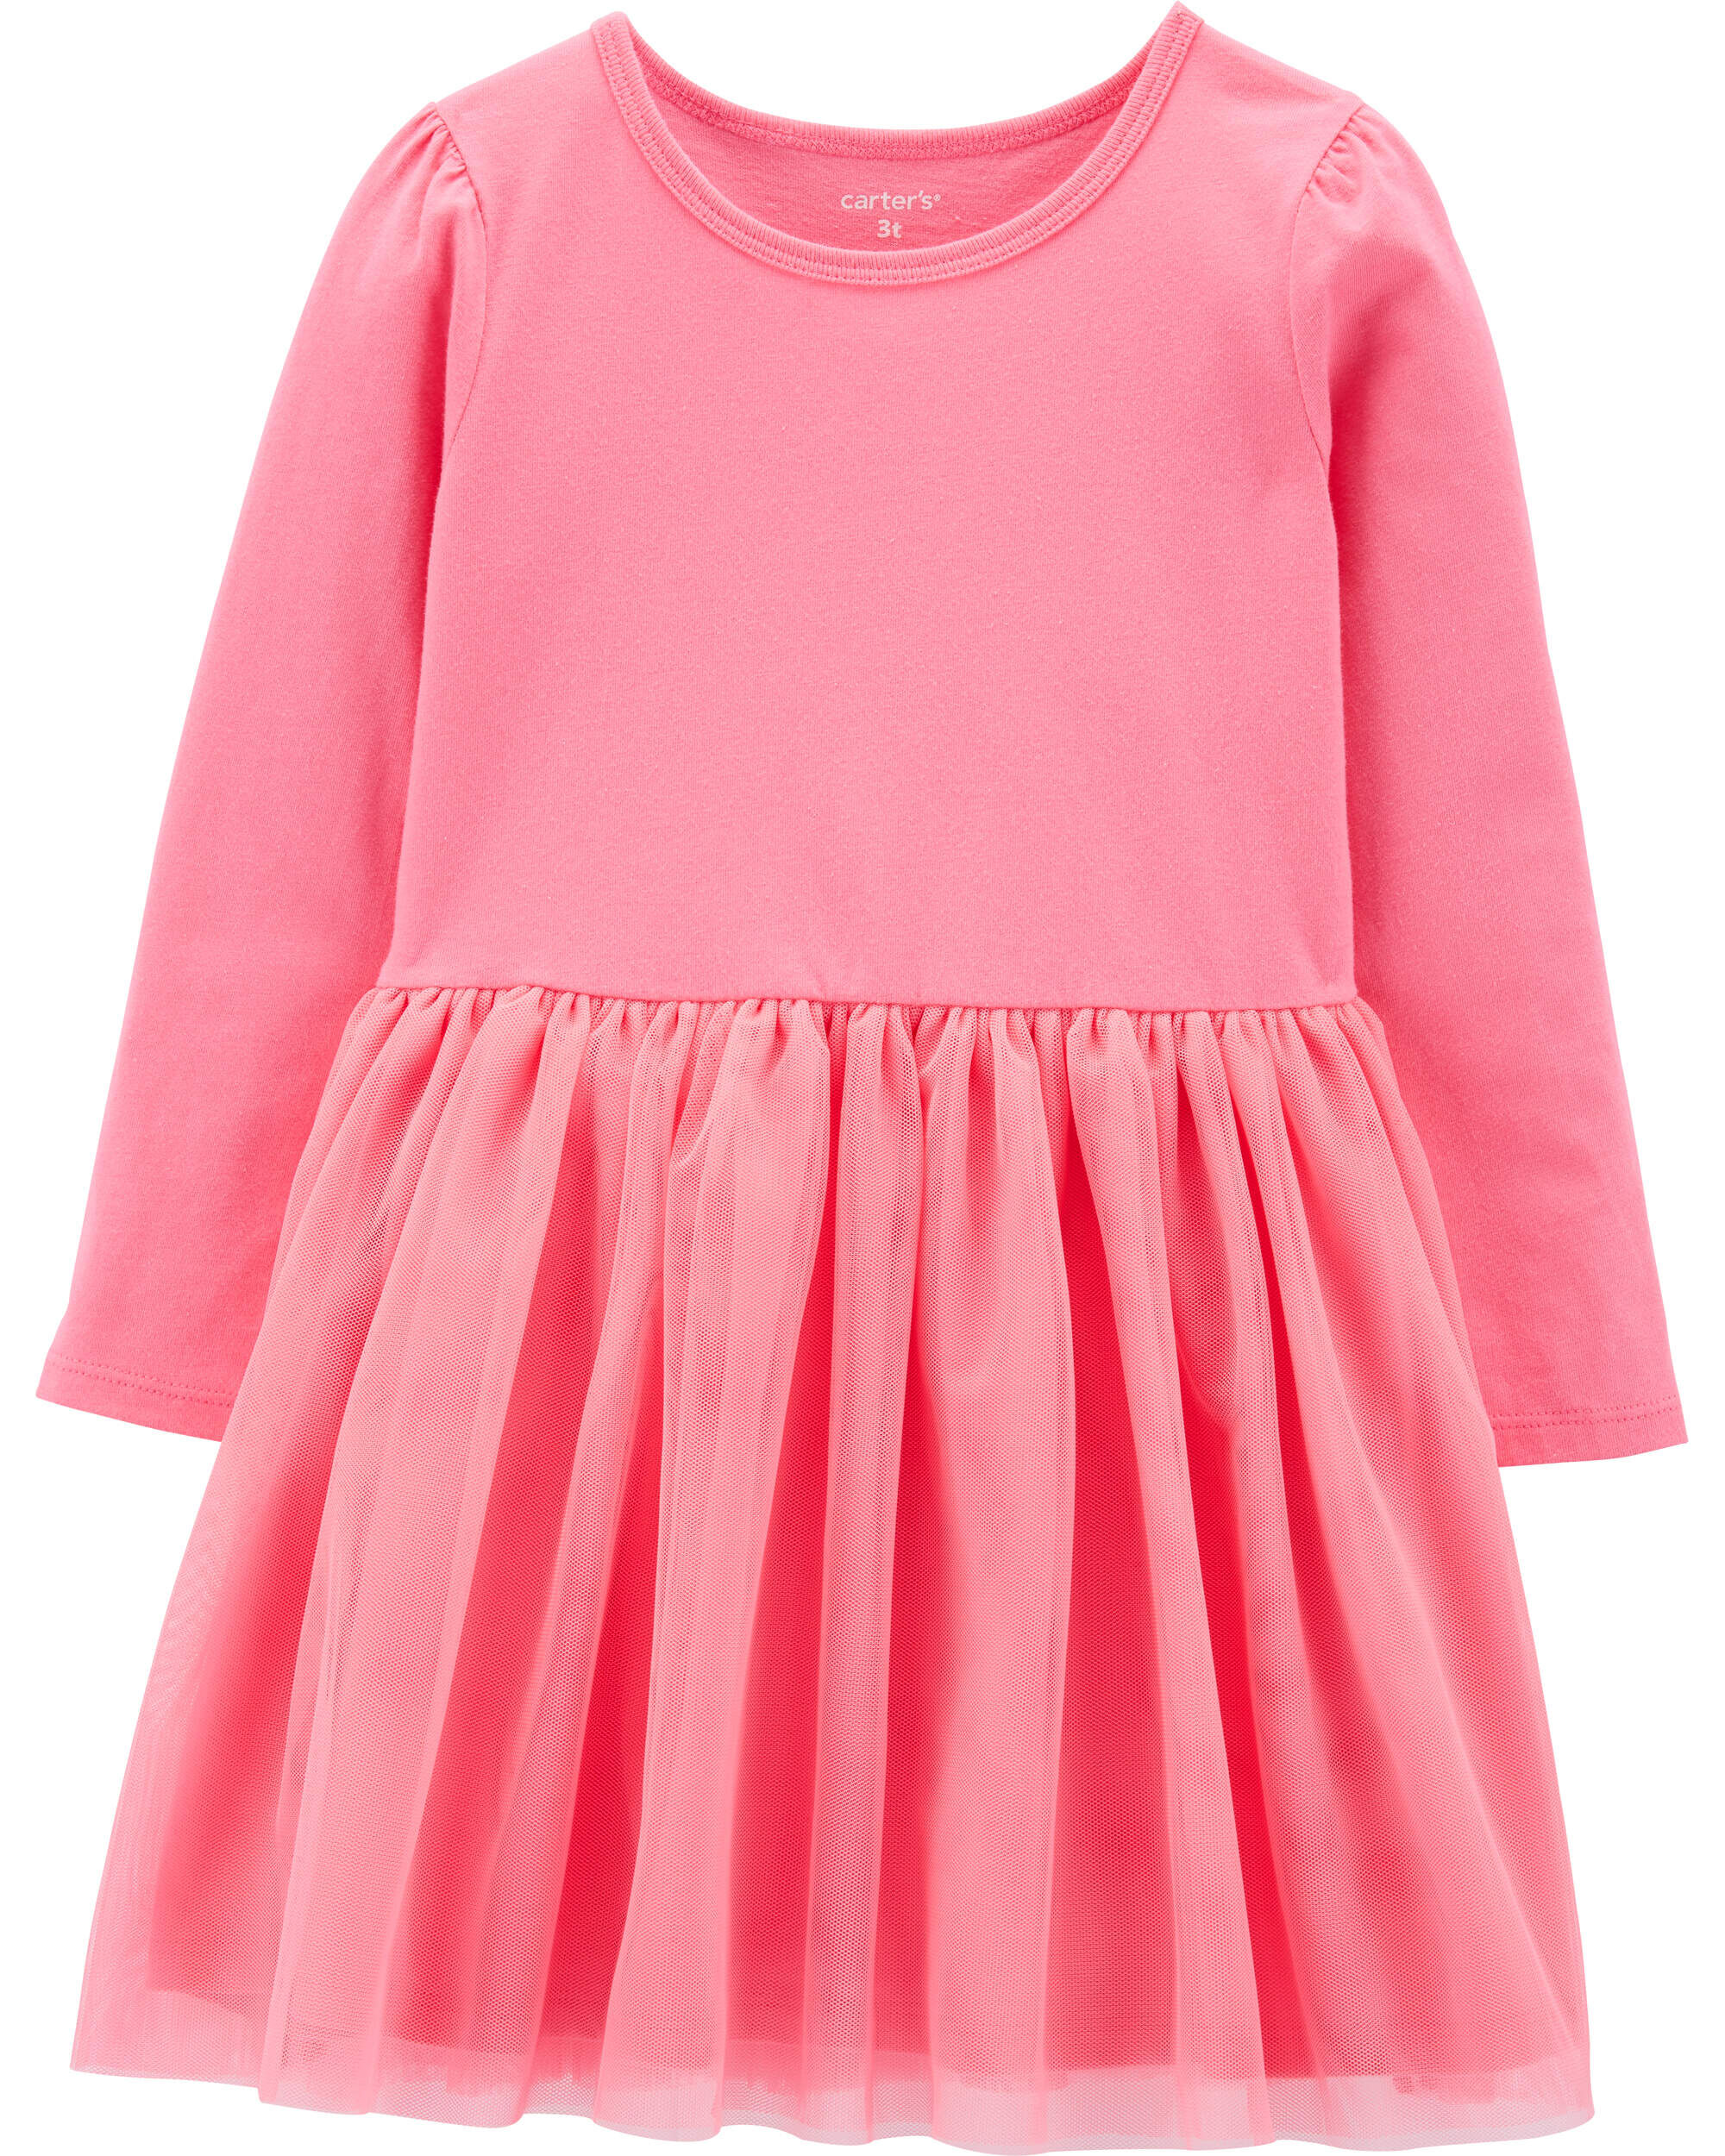 Toddler Hot Pink Tutu Jersey Dress ...